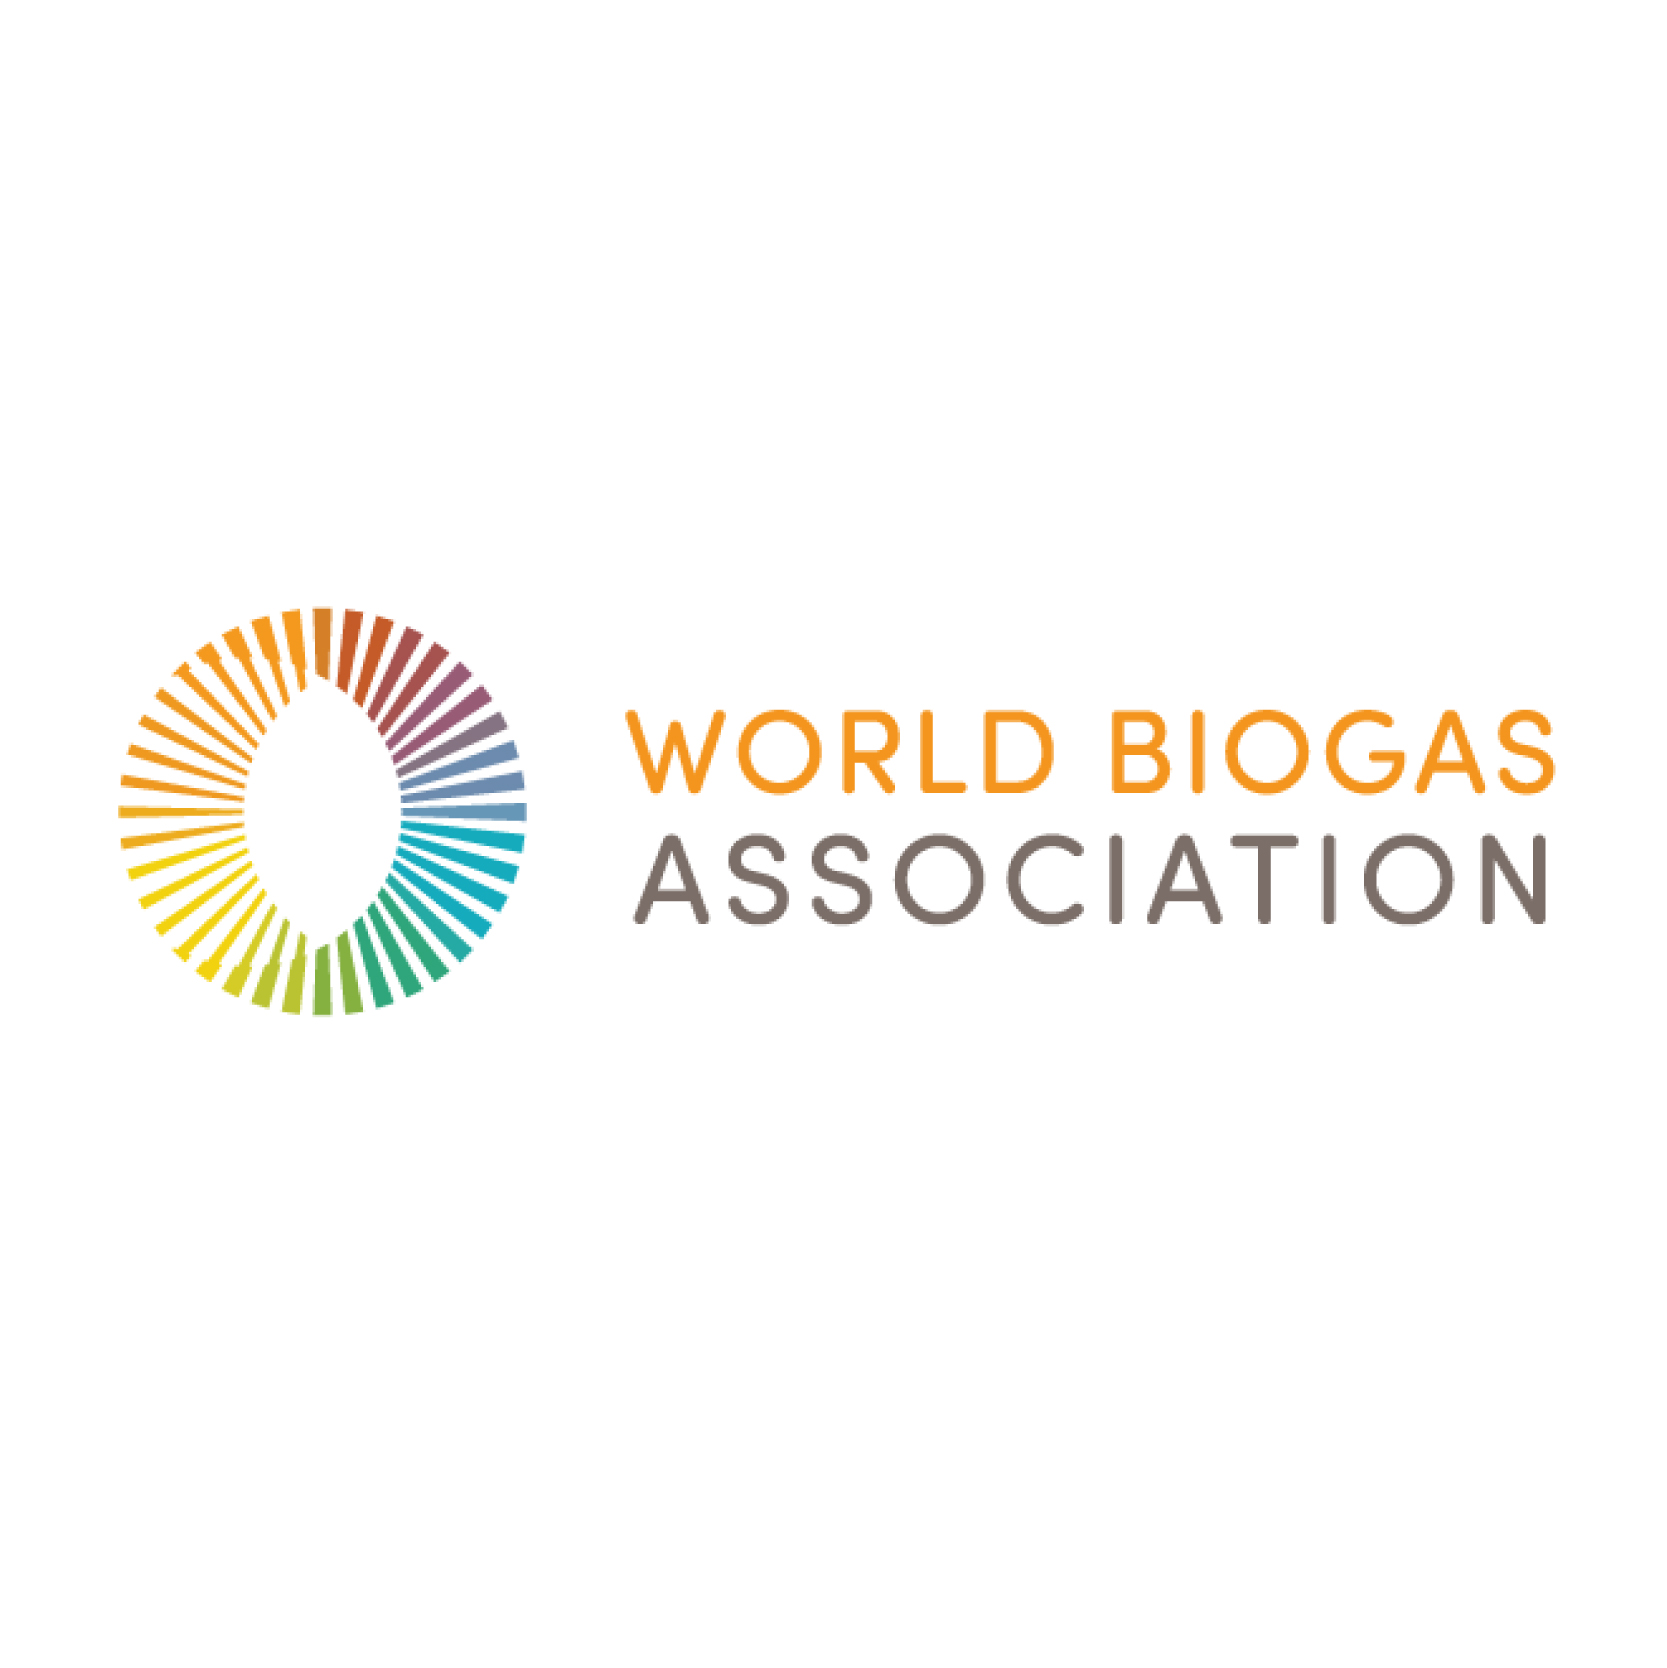 World Biogas Association